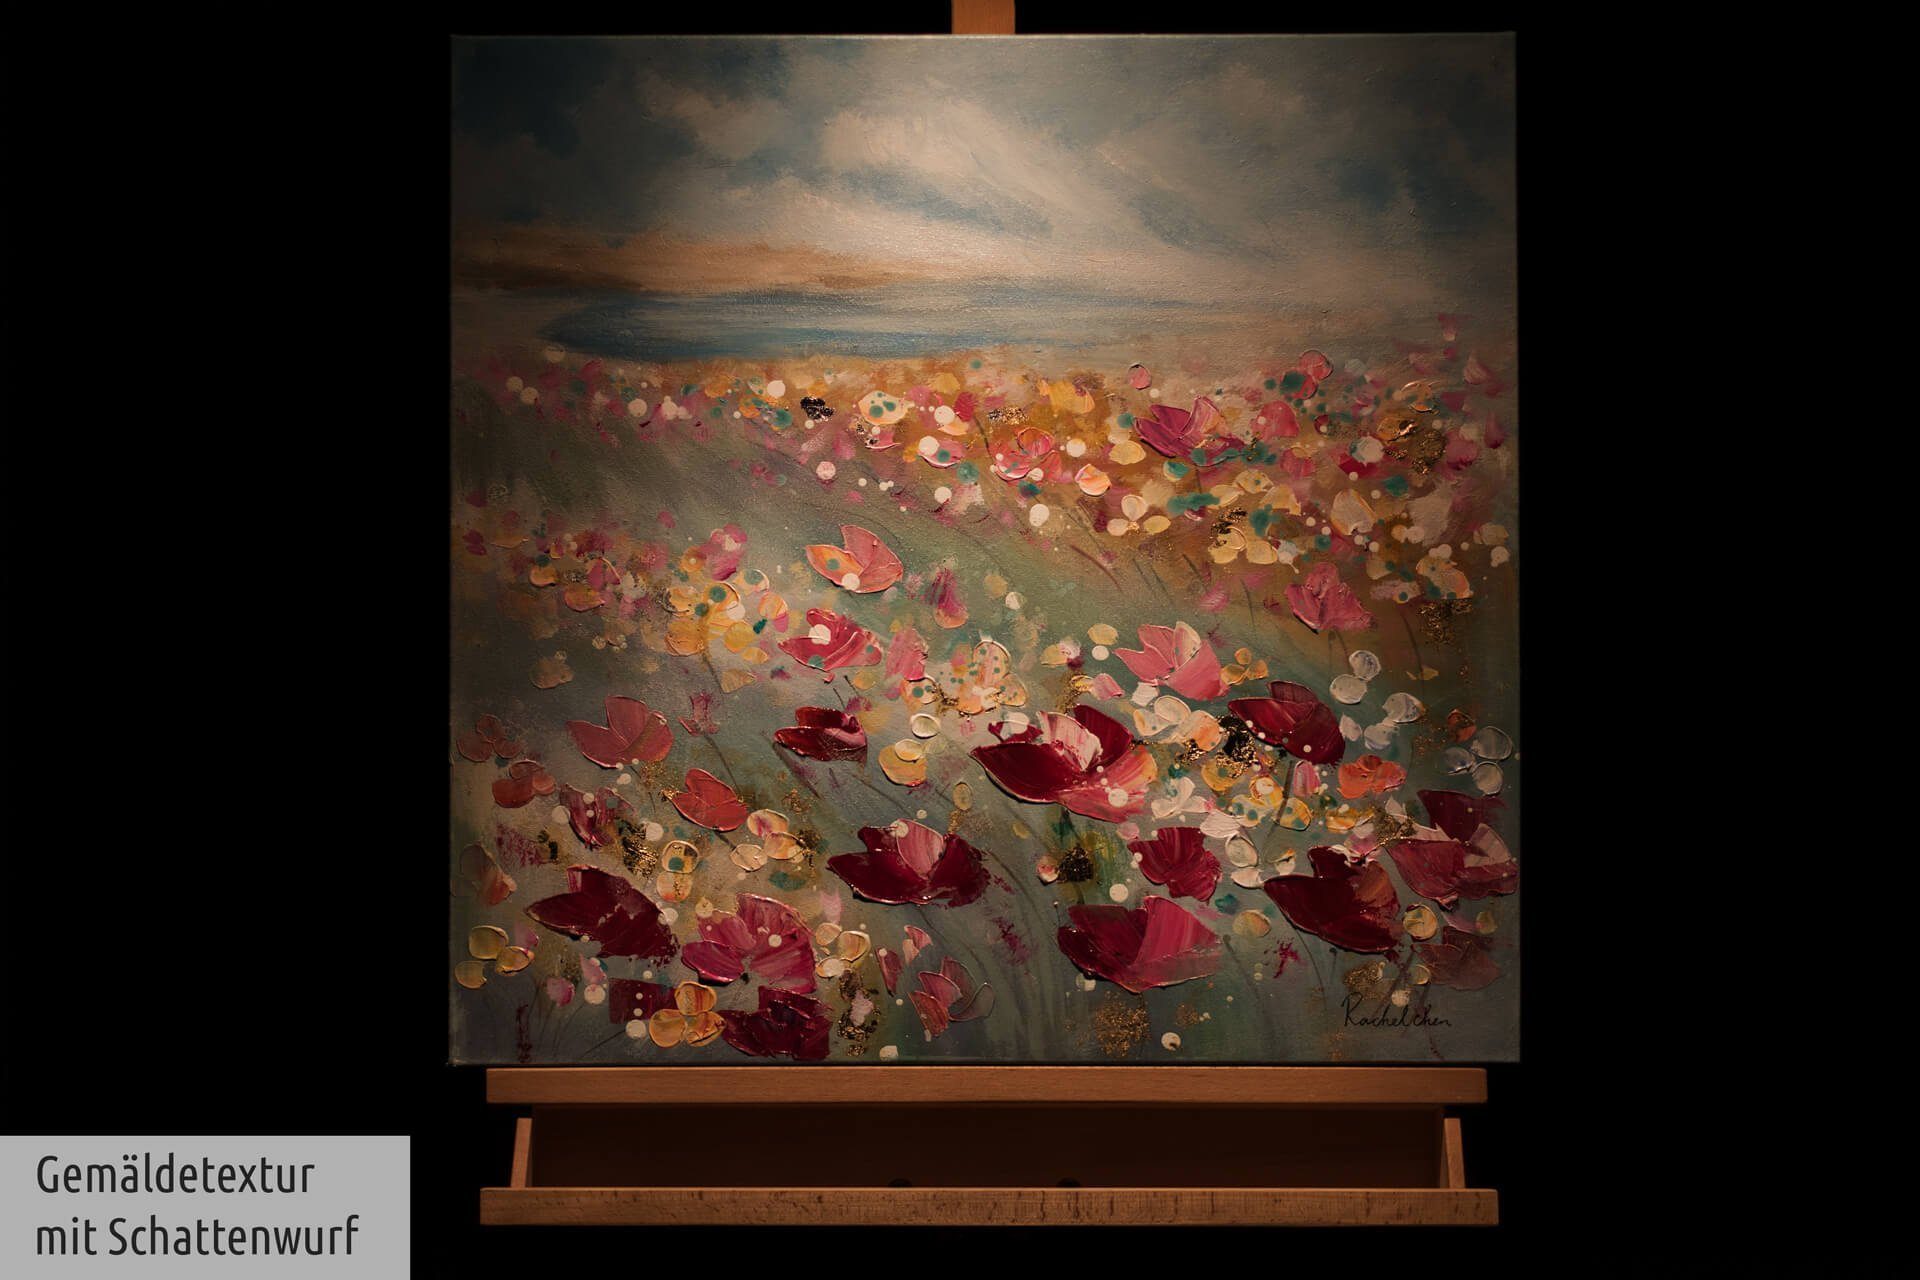 Leinwandbild 60x60 Wandbild Wohnzimmer 100% Herbaceous Gemälde Poppy HANDGEMALT KUNSTLOFT cm,